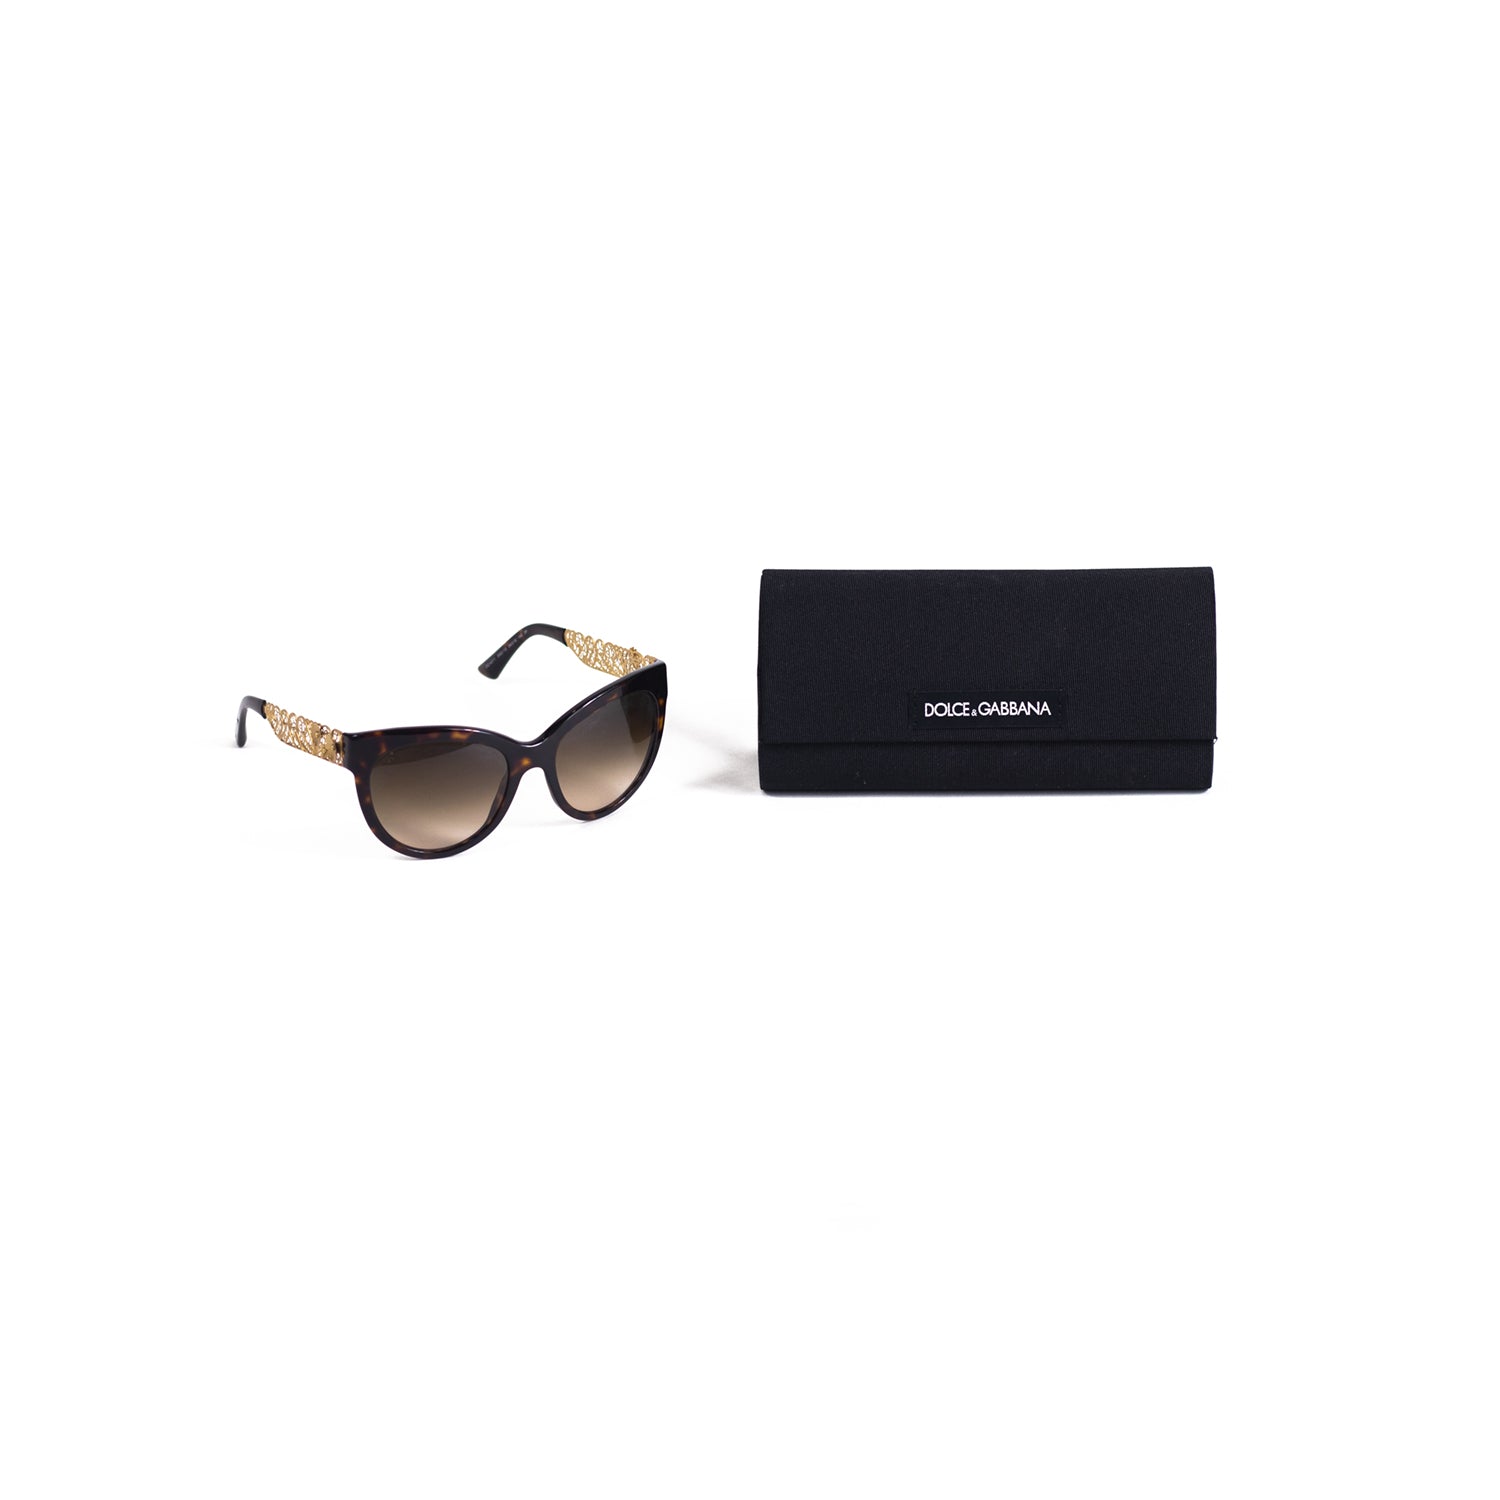 Black Golden Design Sunglasses